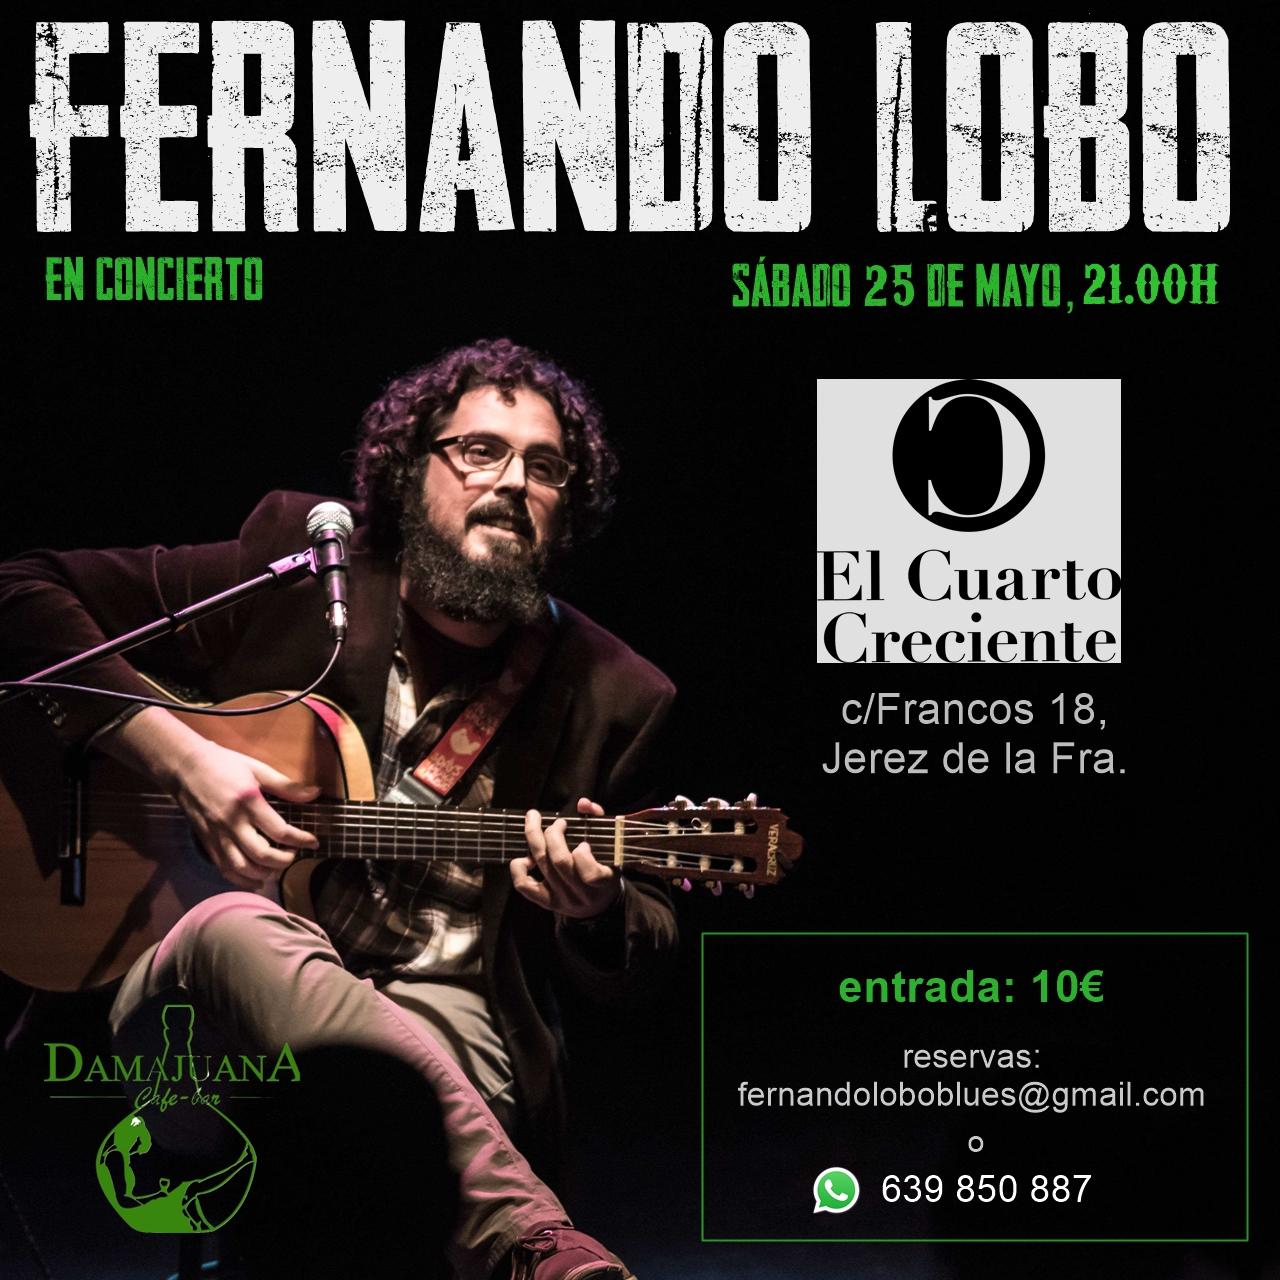 Concierto de Fernando Lobo este sábado en Jerez